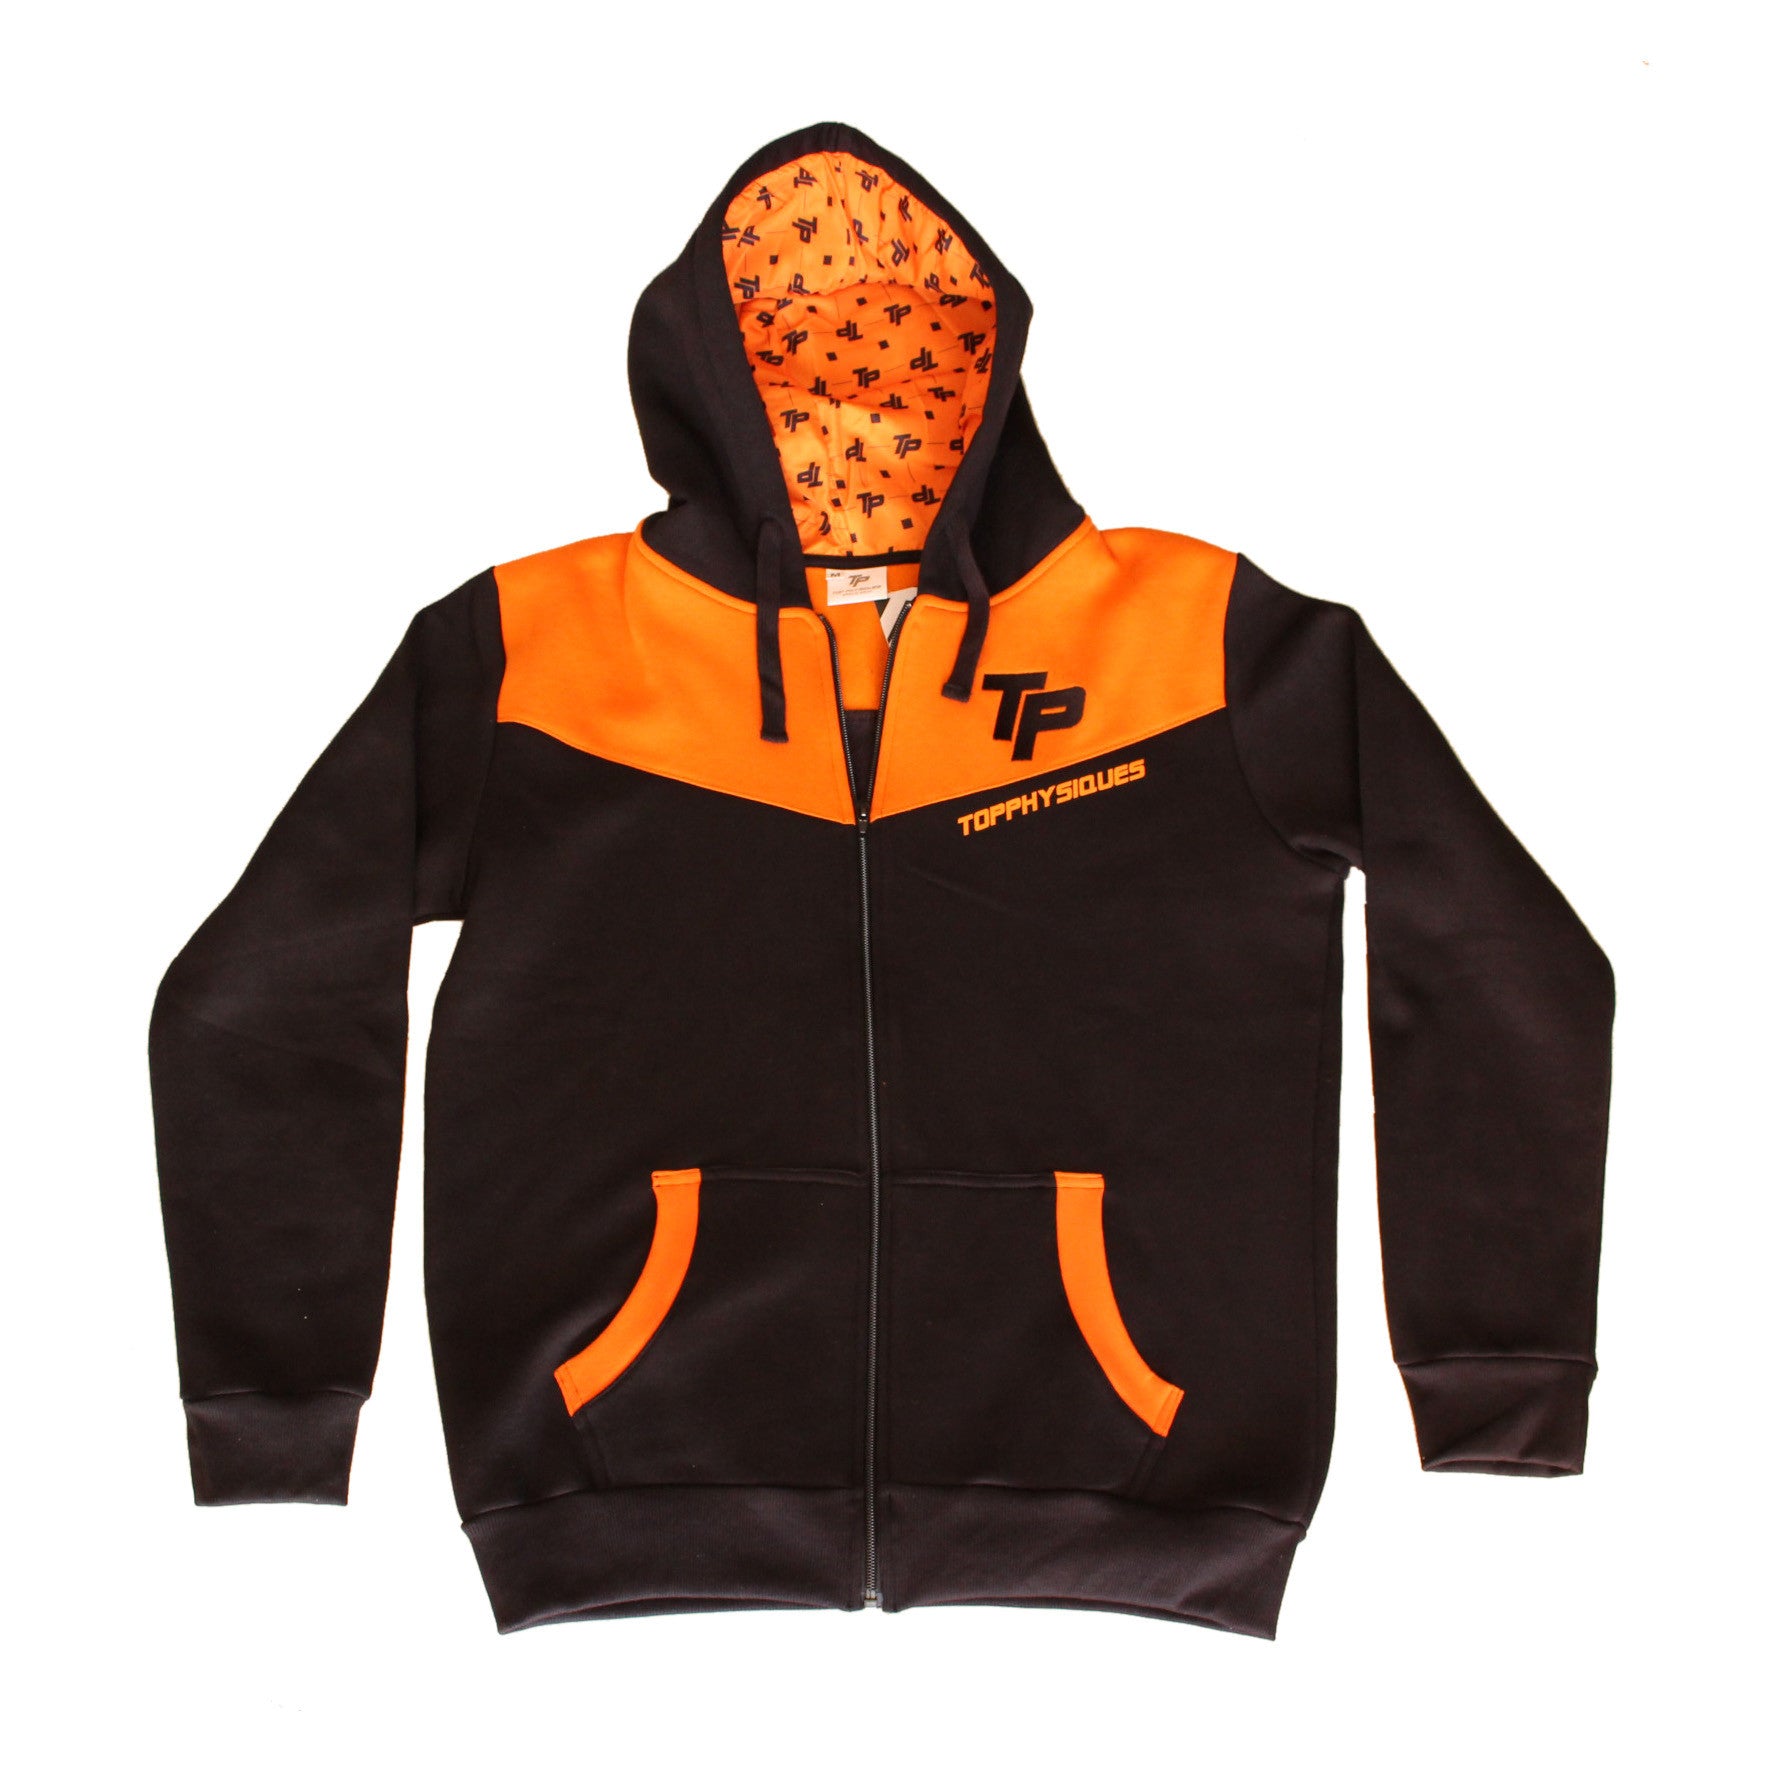 Venom Zip Hoodie - Orange - Topphysiques Wear